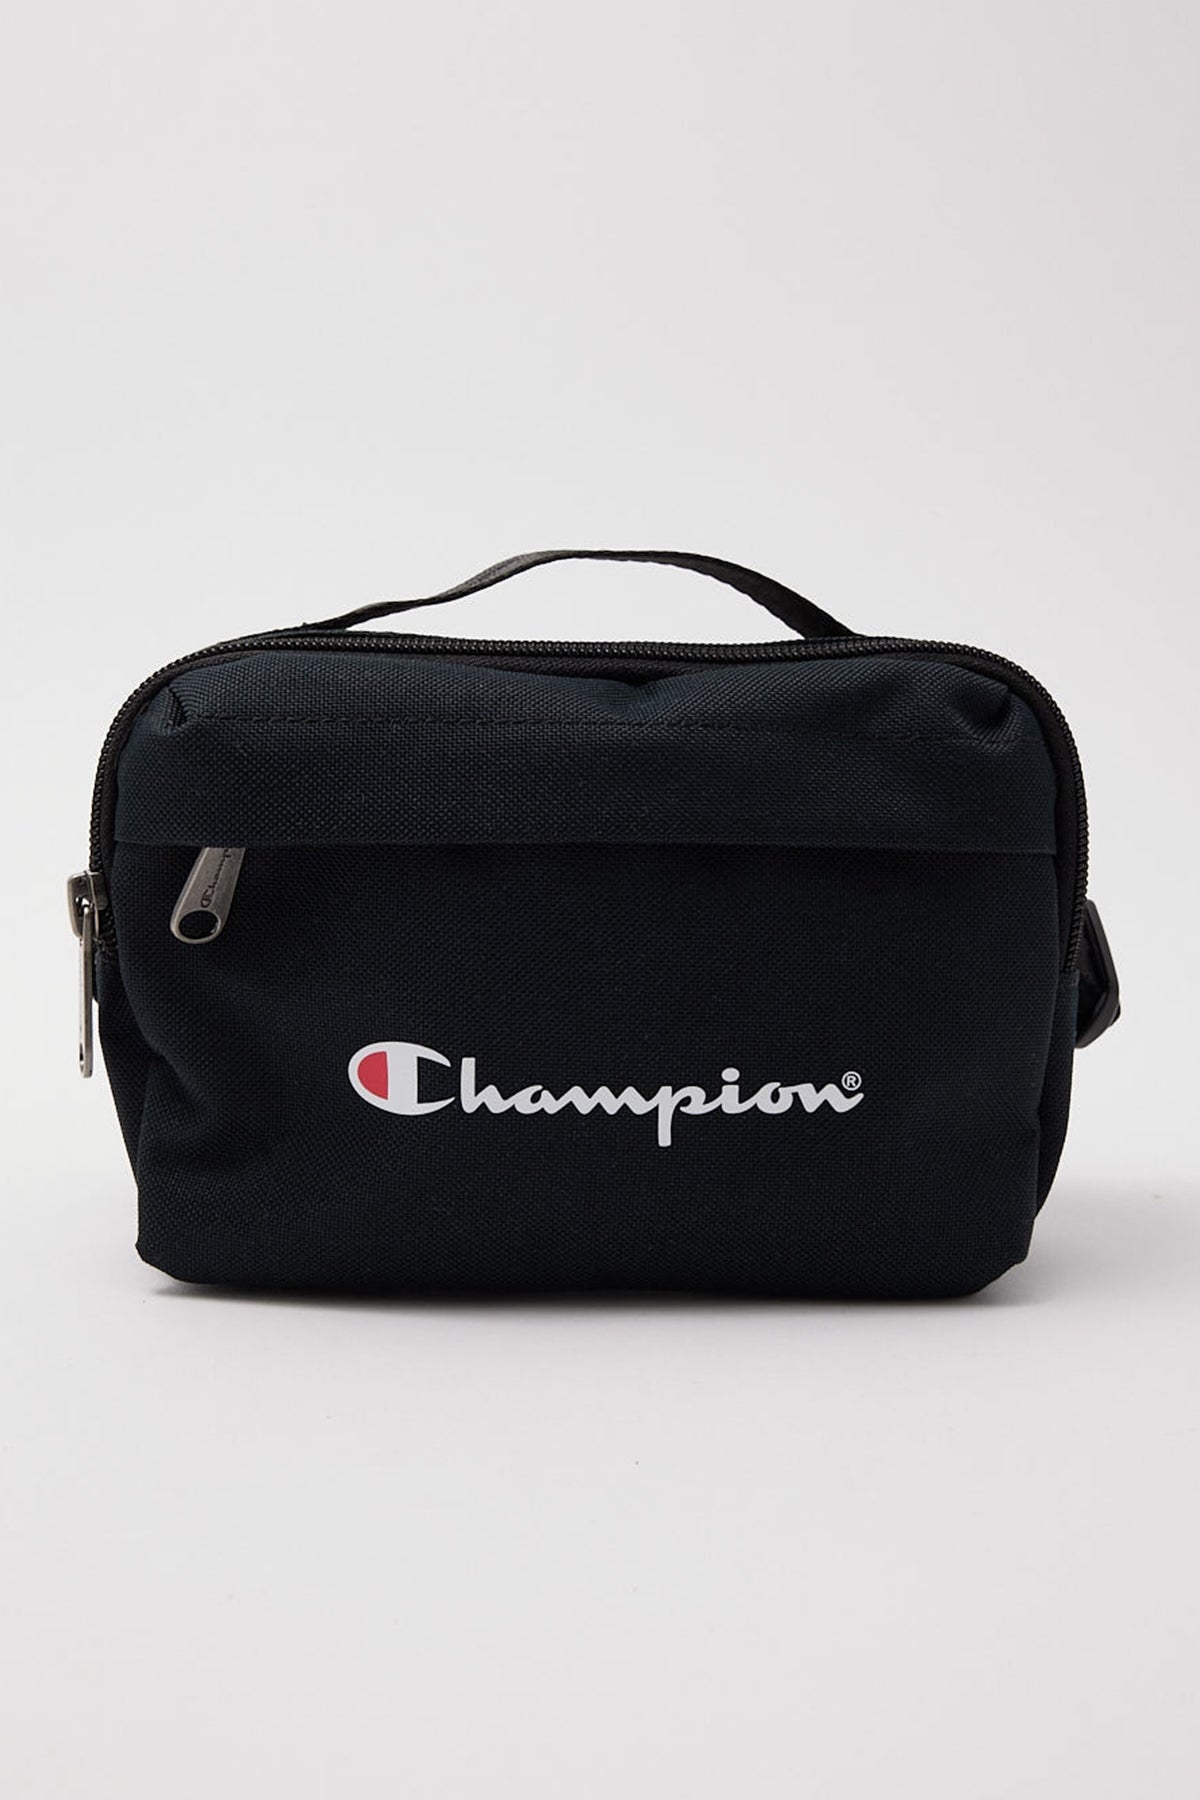 Champion Waist Bag Black